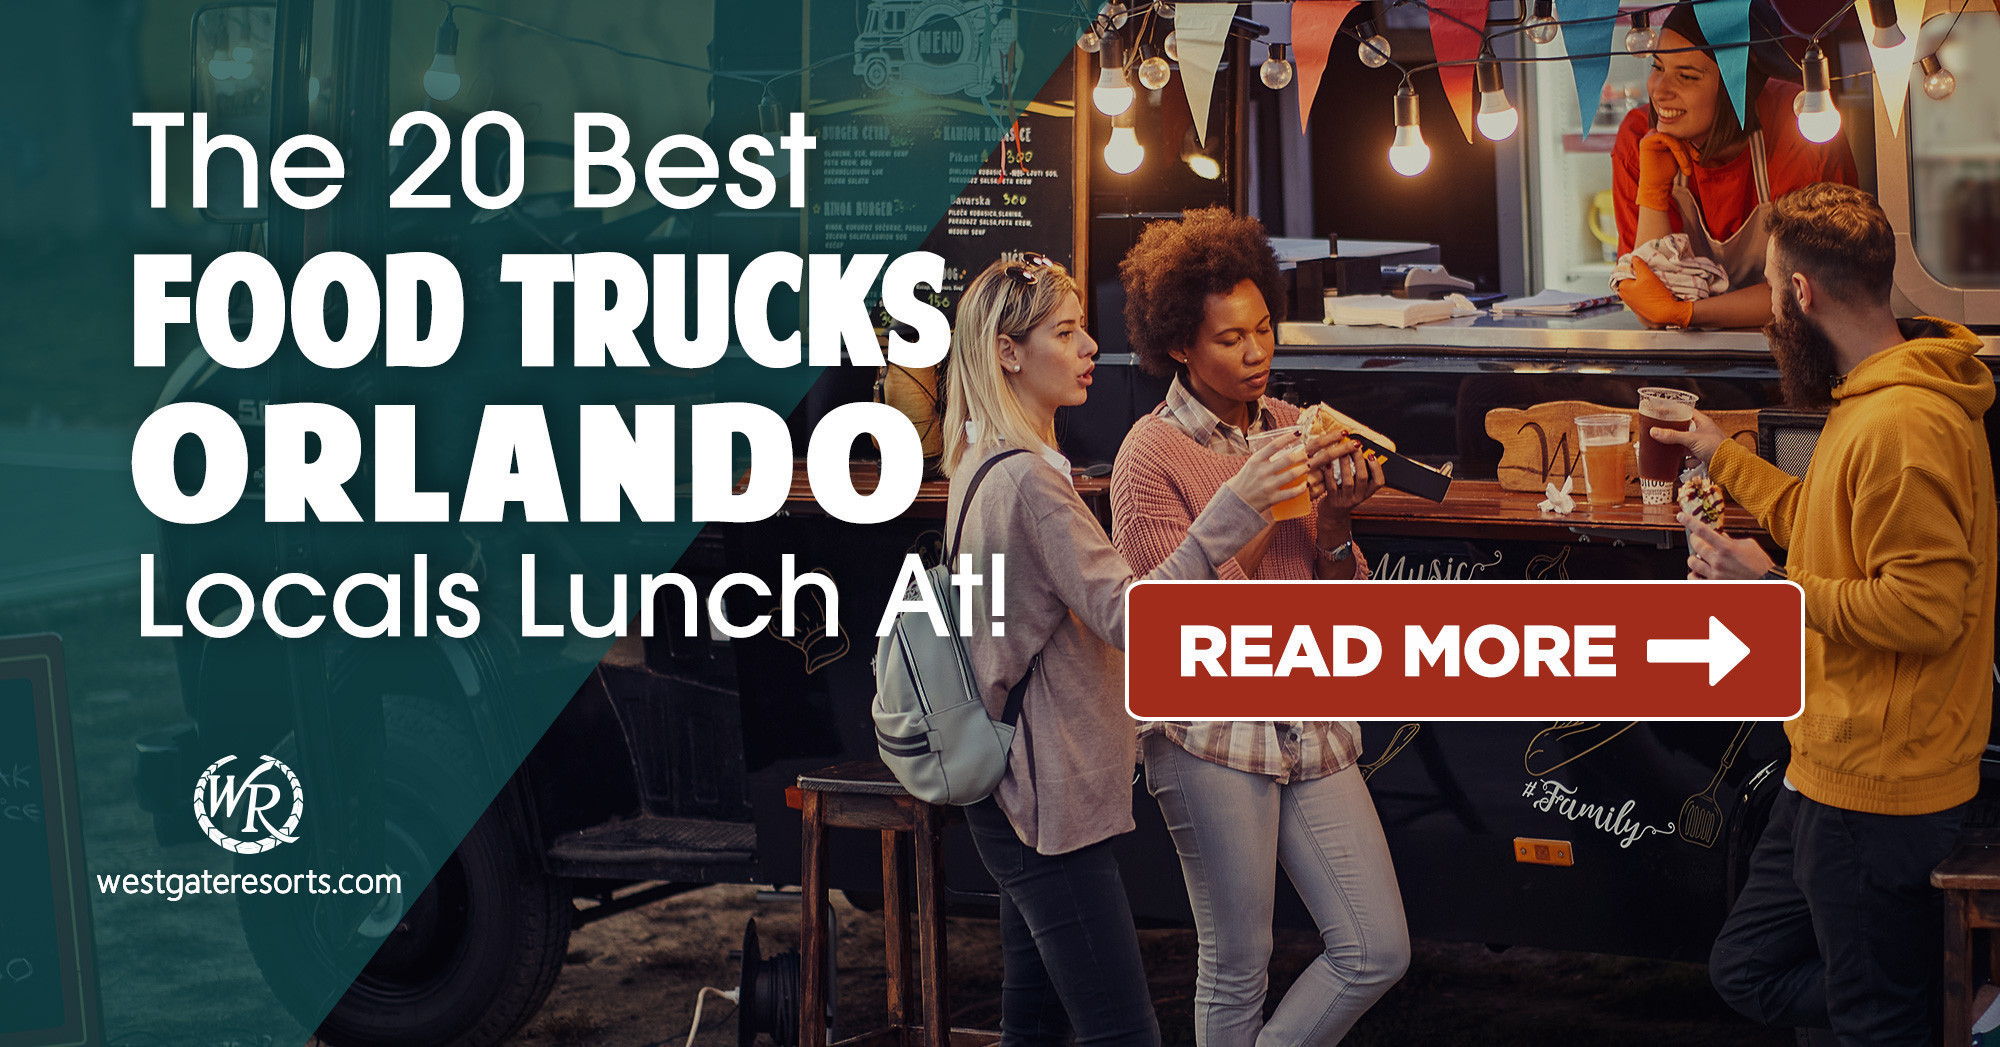 The 20 Best Food Trucks Orlando Locals Lunch At!